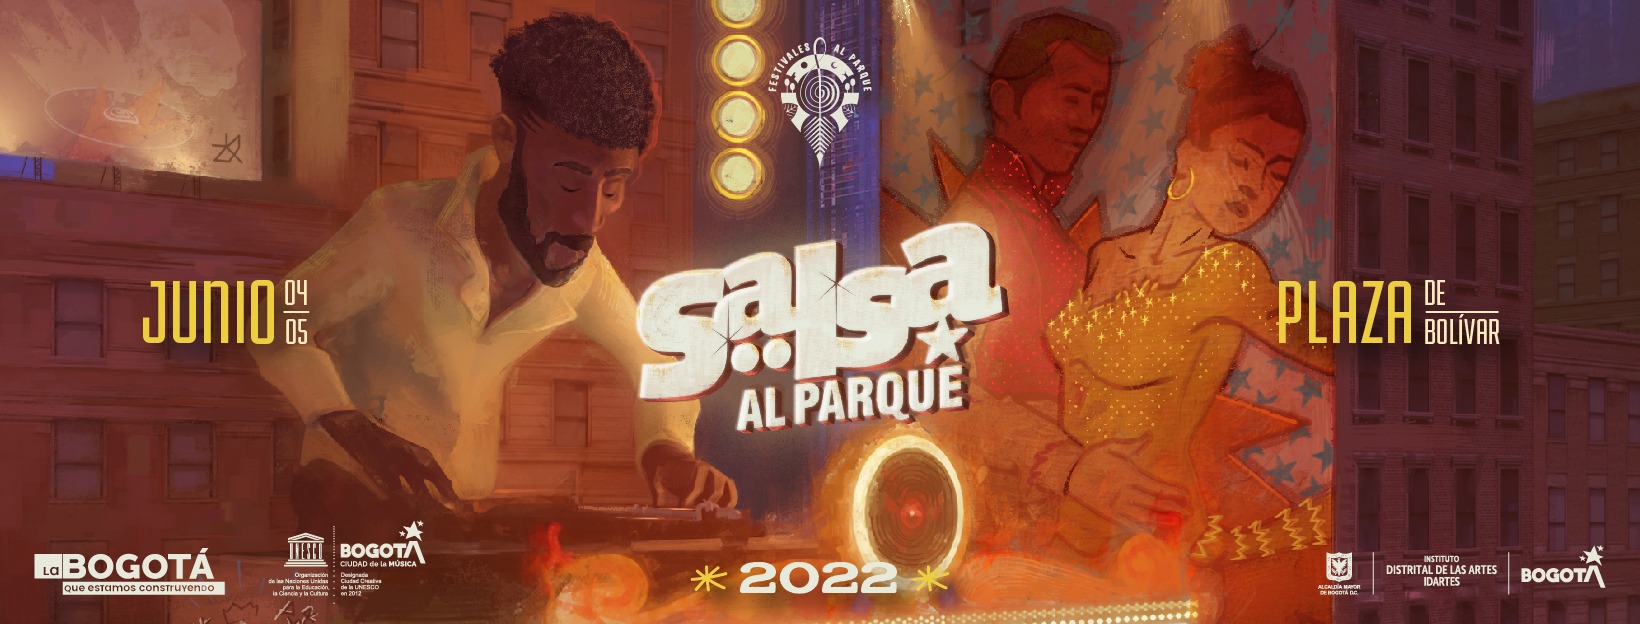 Festival Salsa Al Parque 2022 Bogotá